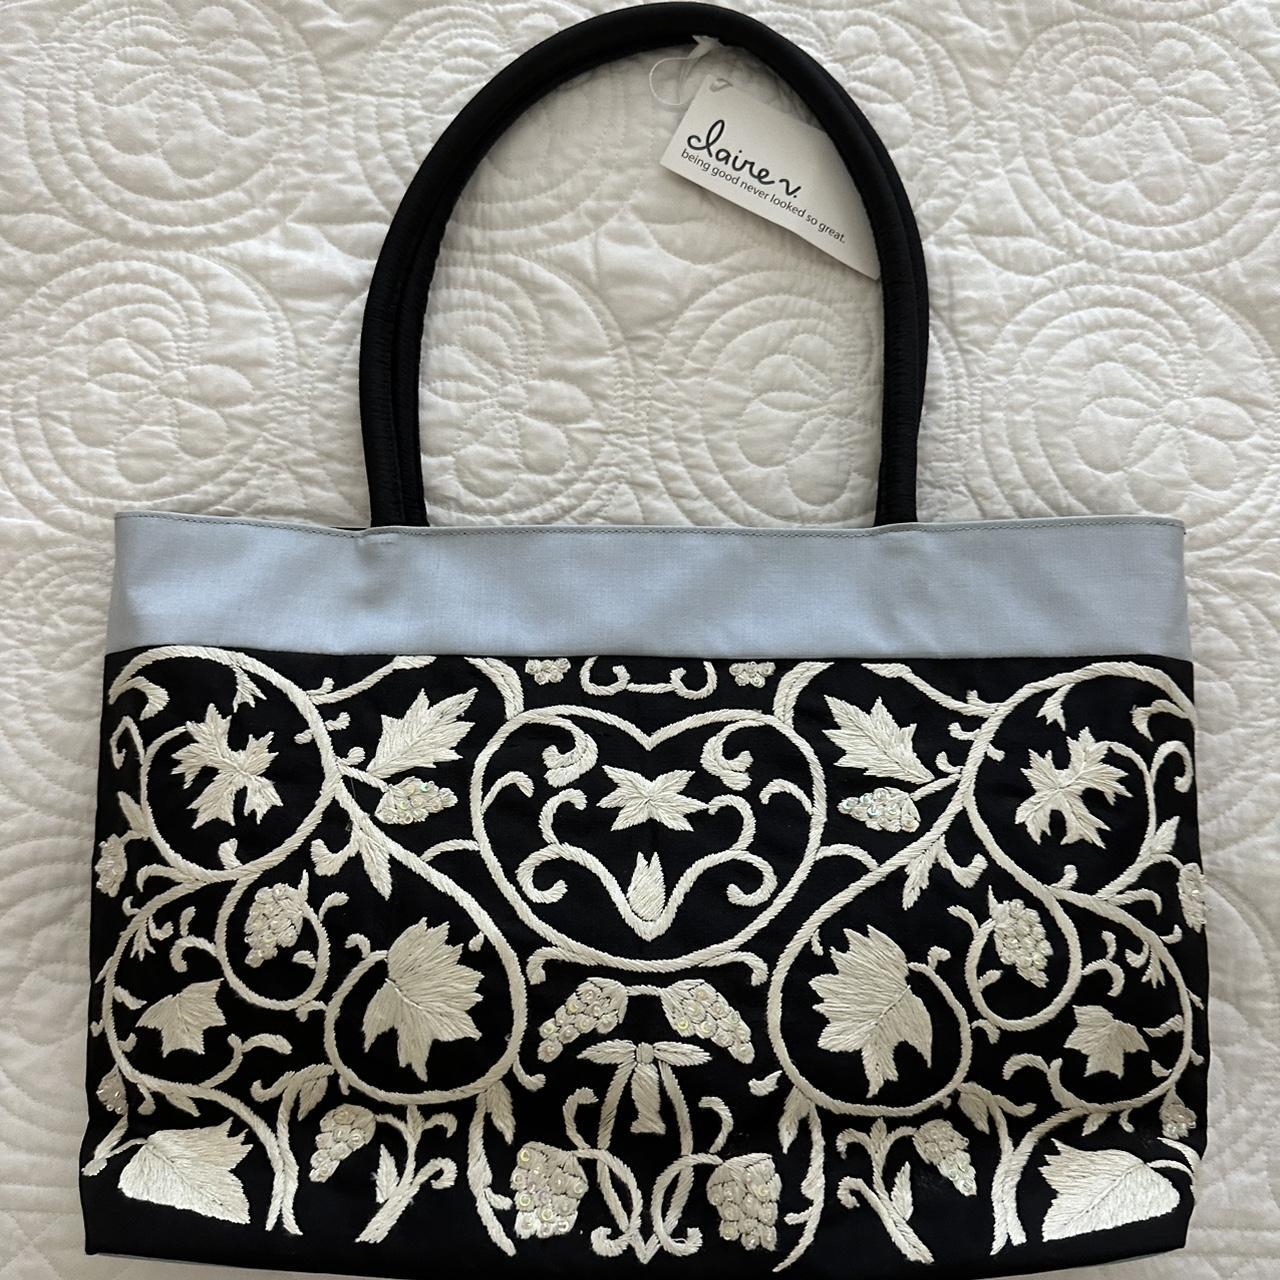 Beautiful embroidered Claire V Brand “Wisteria Bag” - Depop